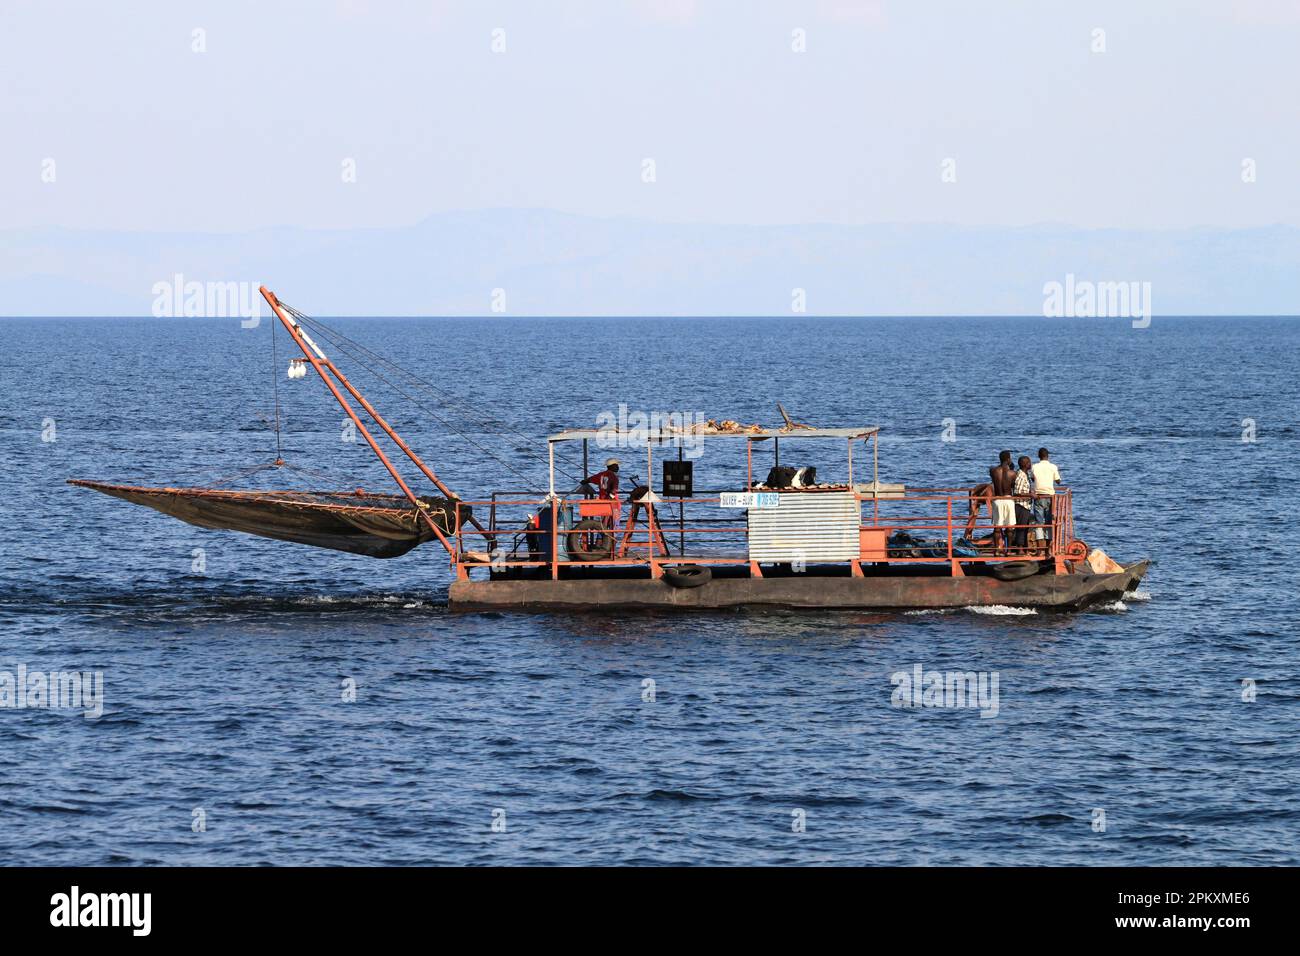 Fishing boats with nets to catch kapenta (Lake Tanganyika sardine or Lake Tanganyika sprat) in Lake Kariba, Siavonga, Lake Kariba, Zambezi, Zambia Stock Photo